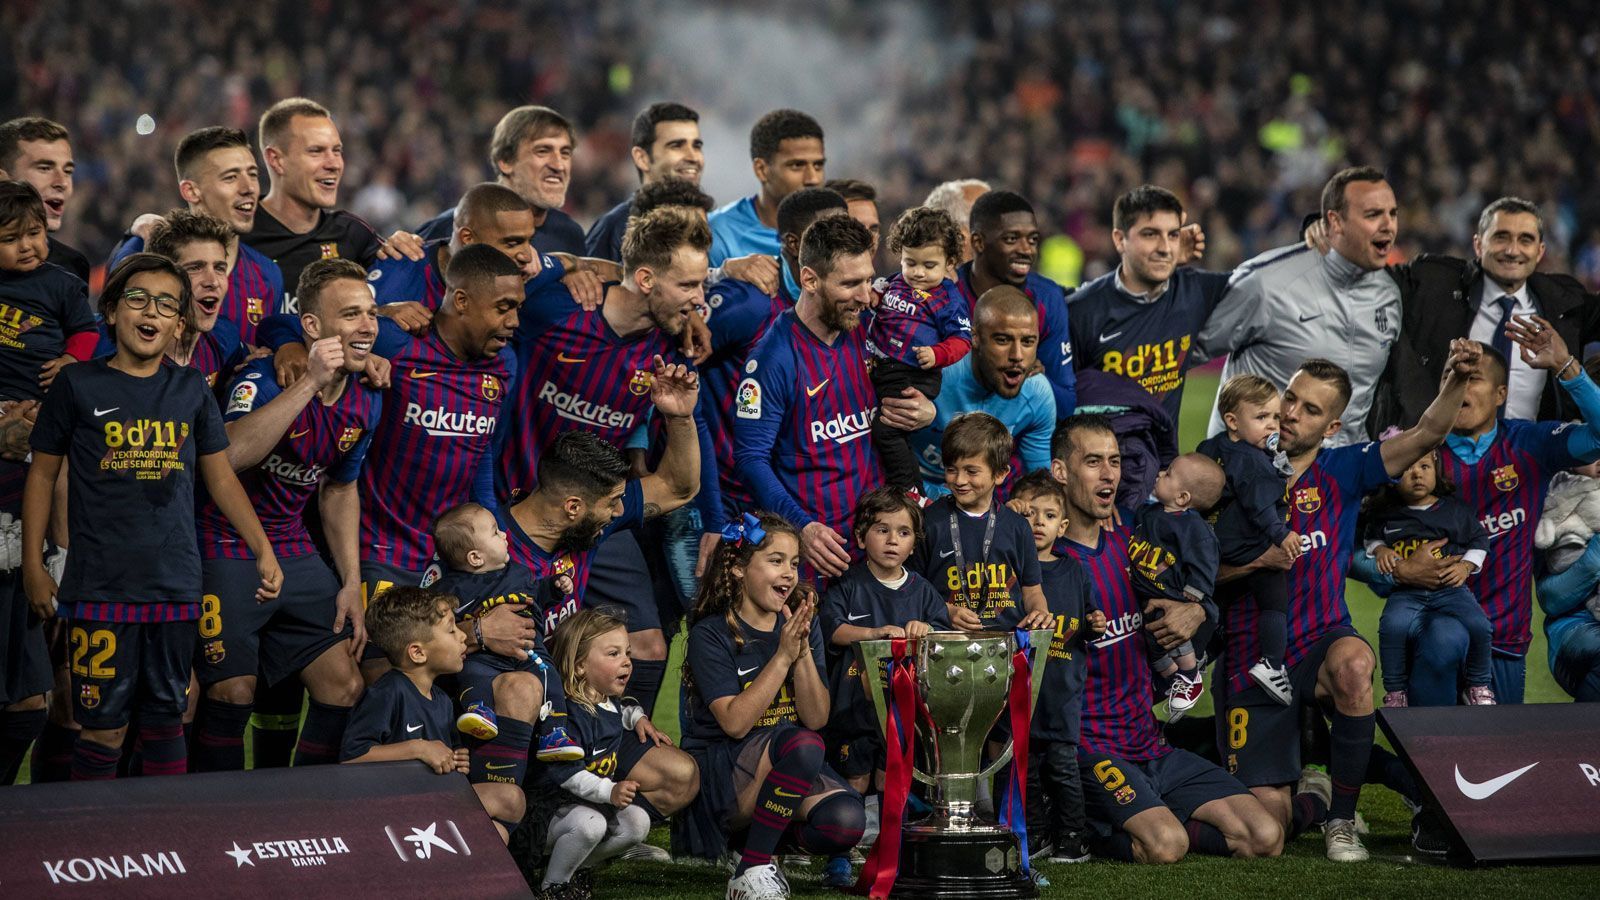 
                <strong>Topf 1: FC Barcelona</strong><br>
                Meister in SpanienGrößter CL-Erfolg: Sieger 1992, 2006, 2009, 2011, 2015
              